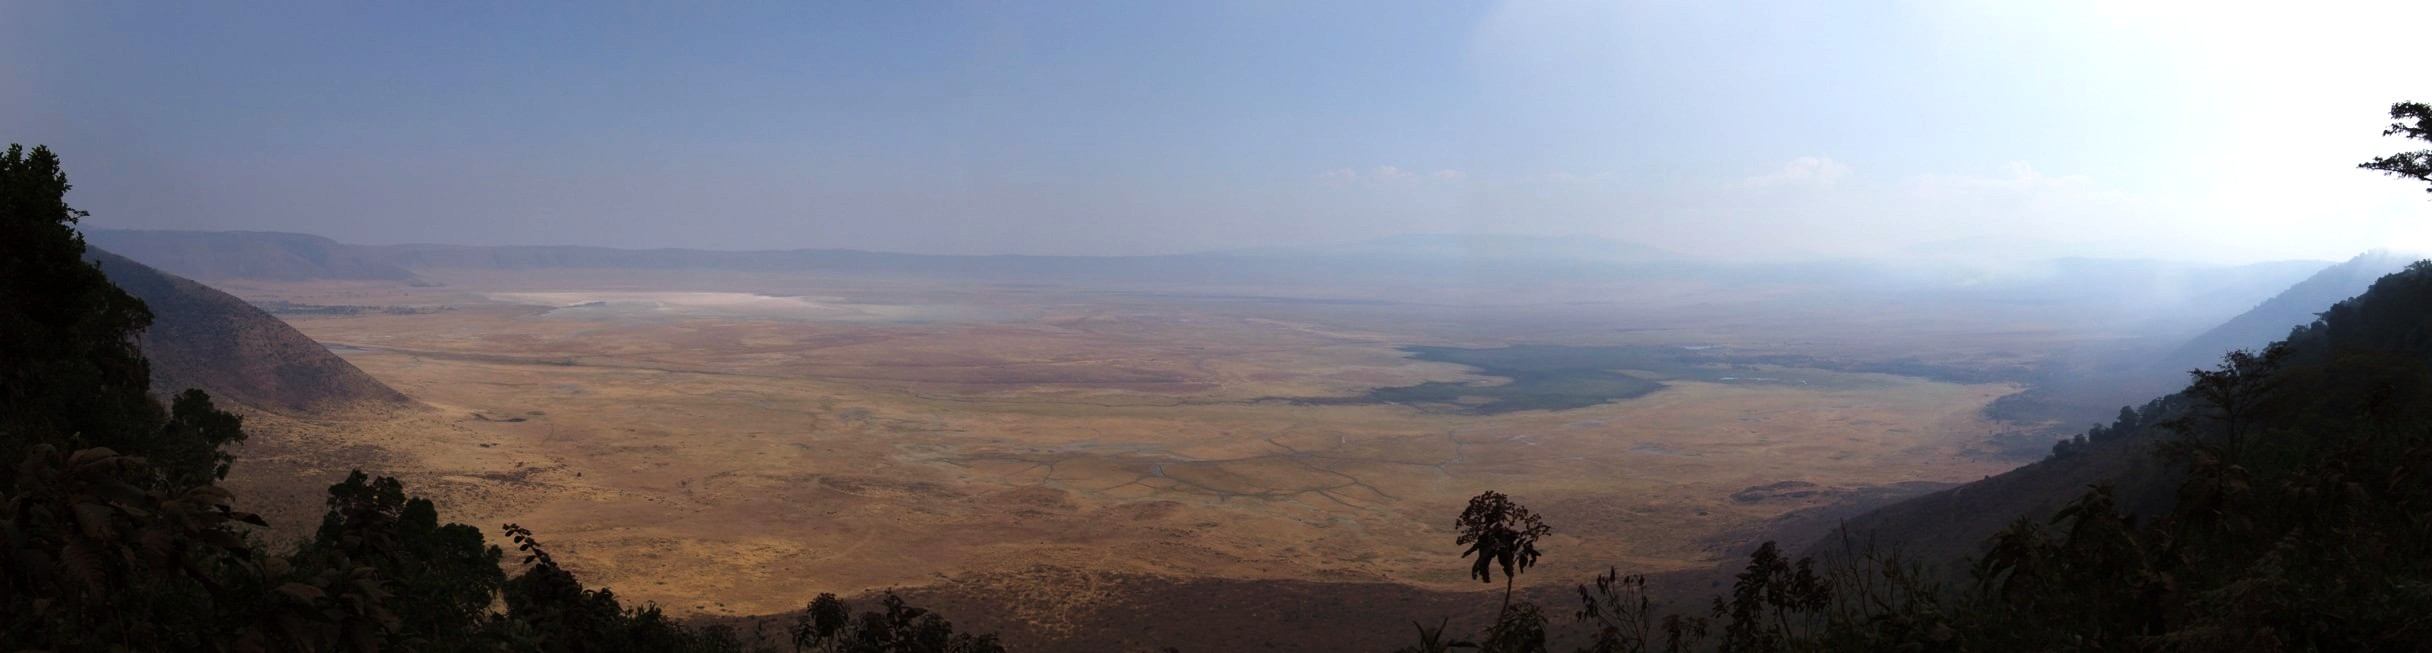 Tanzania wildlife safaris — panoramic view of the ngorongoro crater.